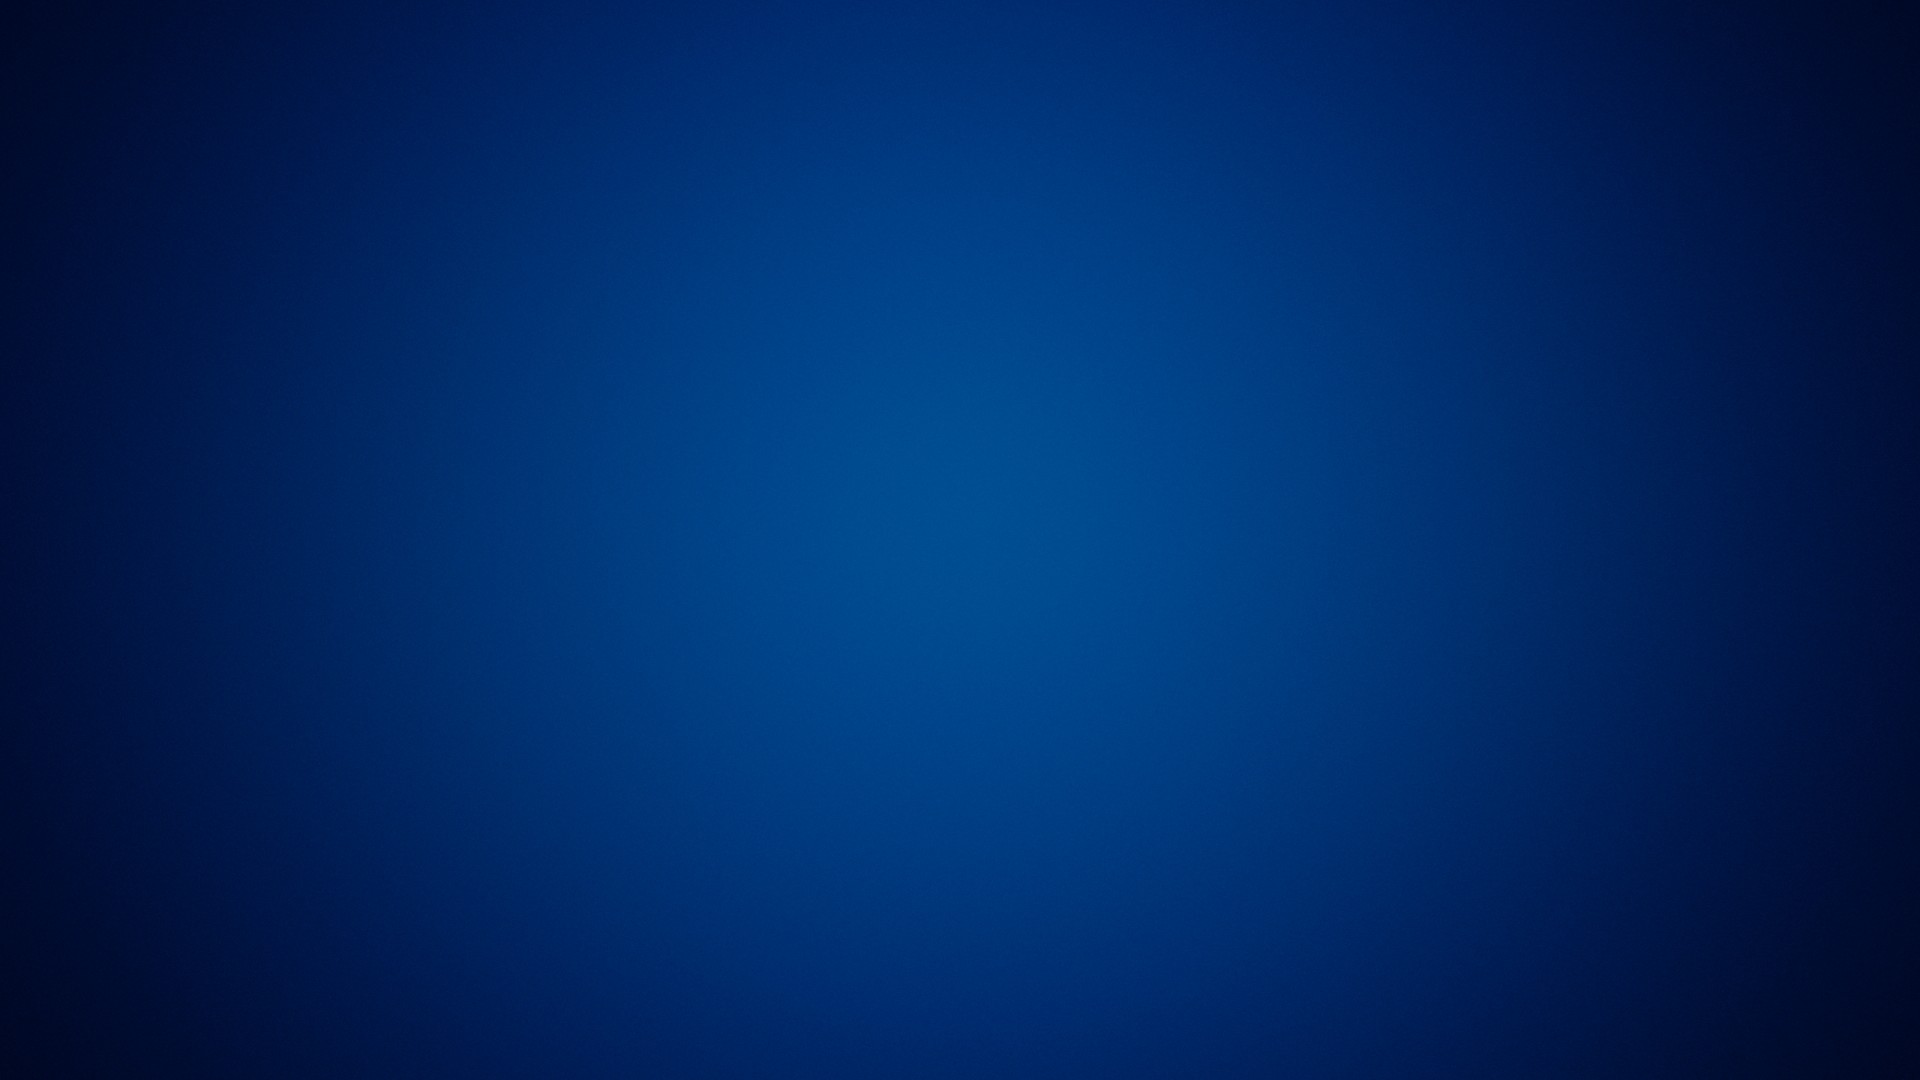 1920x1080 Blue Gradient Wallpaper 397